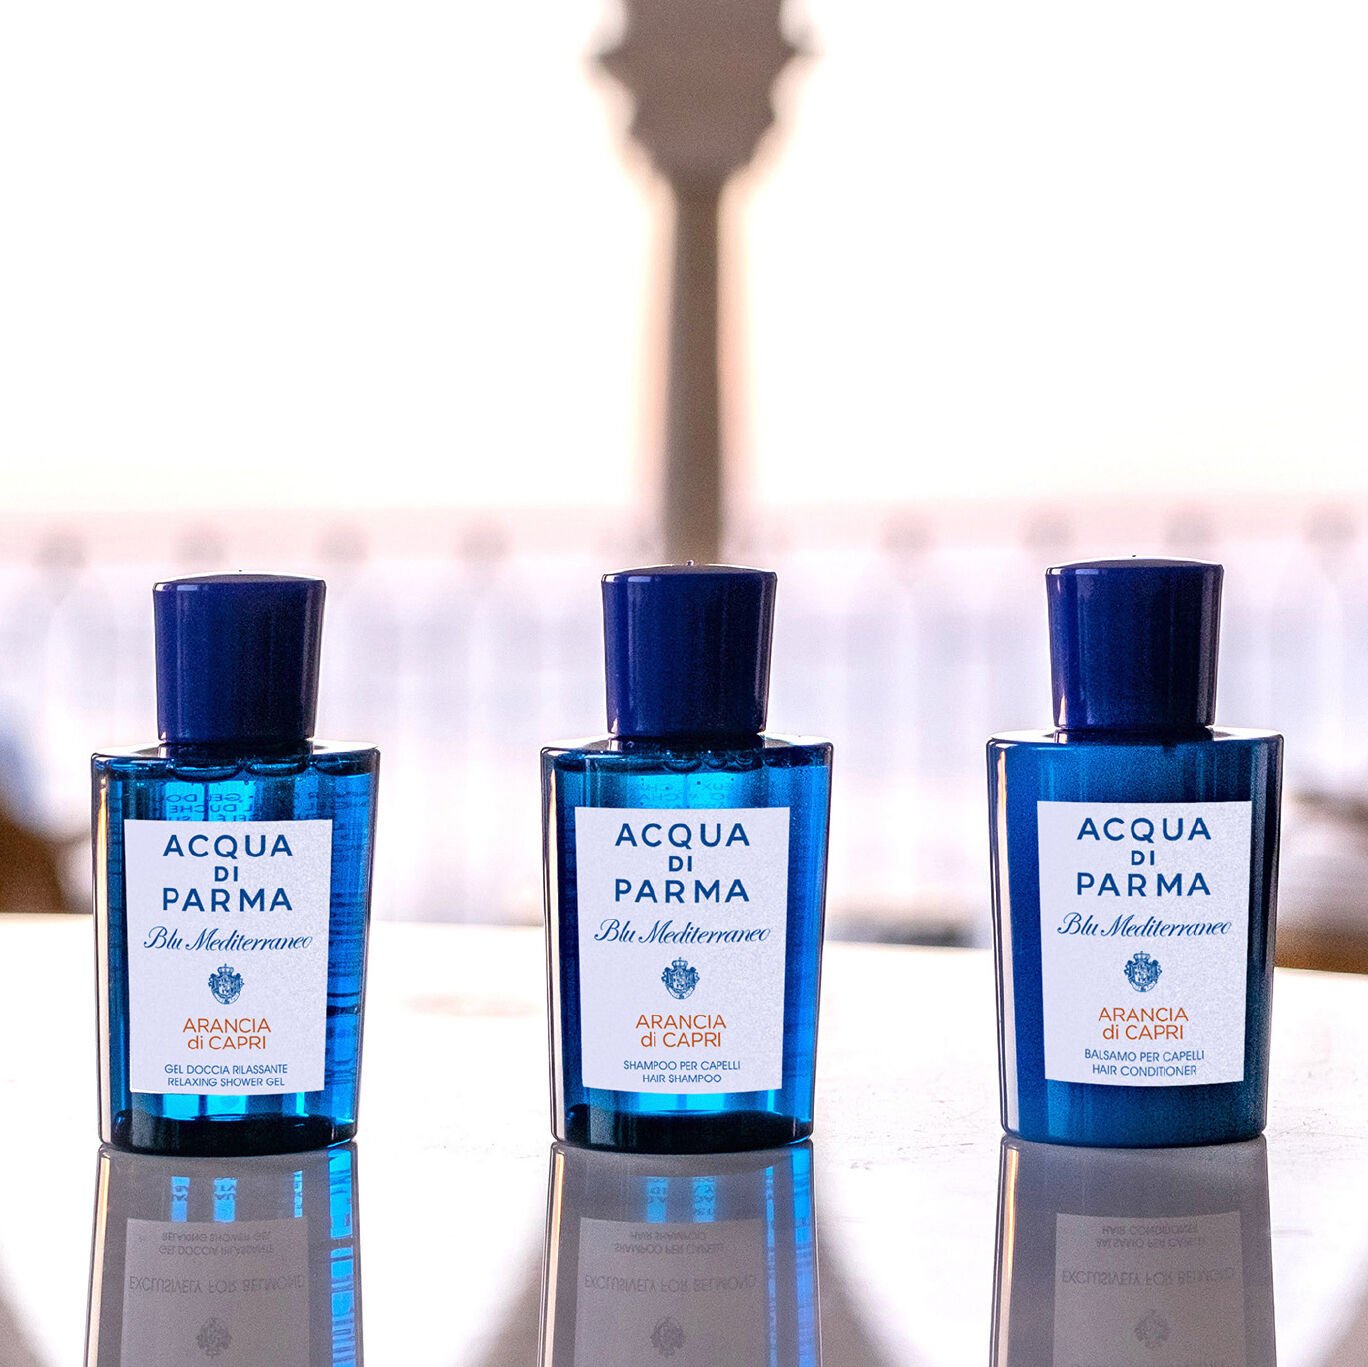 Acqua Di Parma Blu Mediterraneo @ Parfumerie Parfuma 